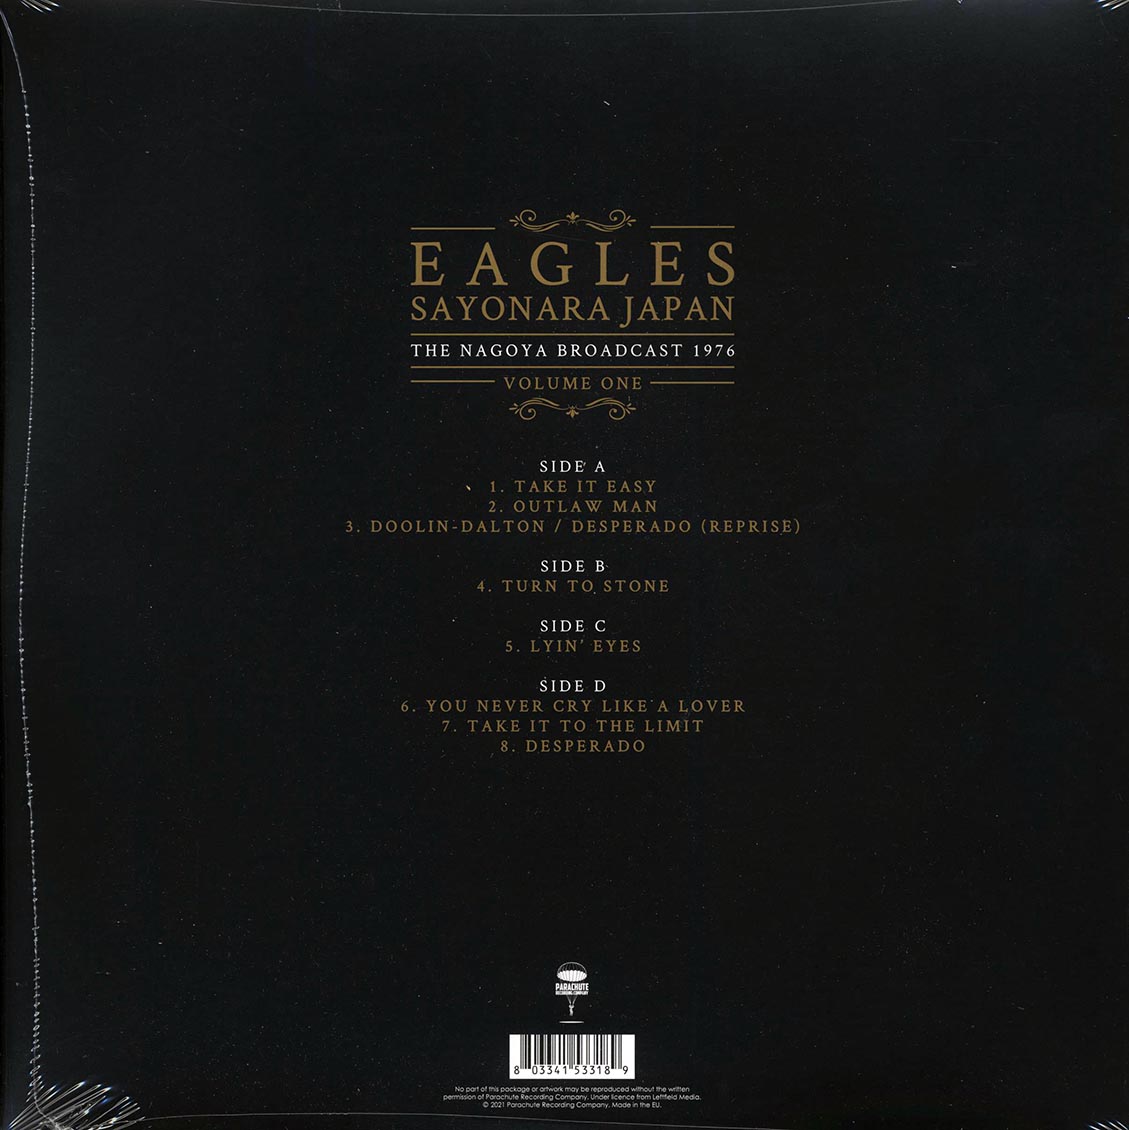 Eagles - Sayonara Japan Volume 1: The Nagoya Broadcast 1976